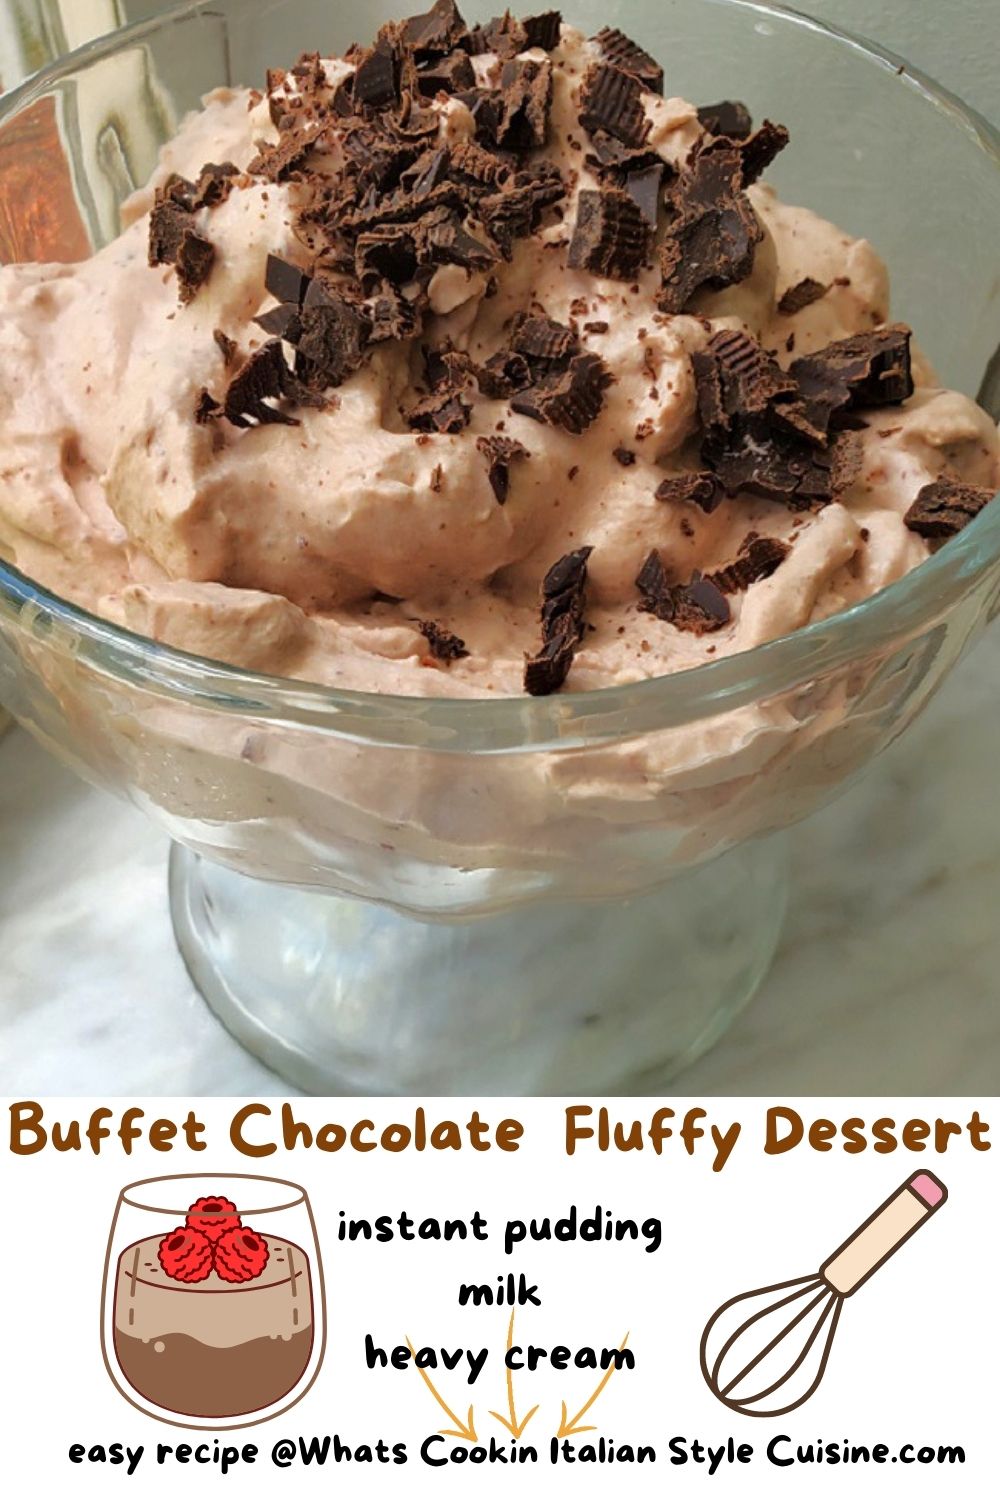 Buffet Chocolate Fluffy Dessert | What's Cookin' Italian Style Cuisine